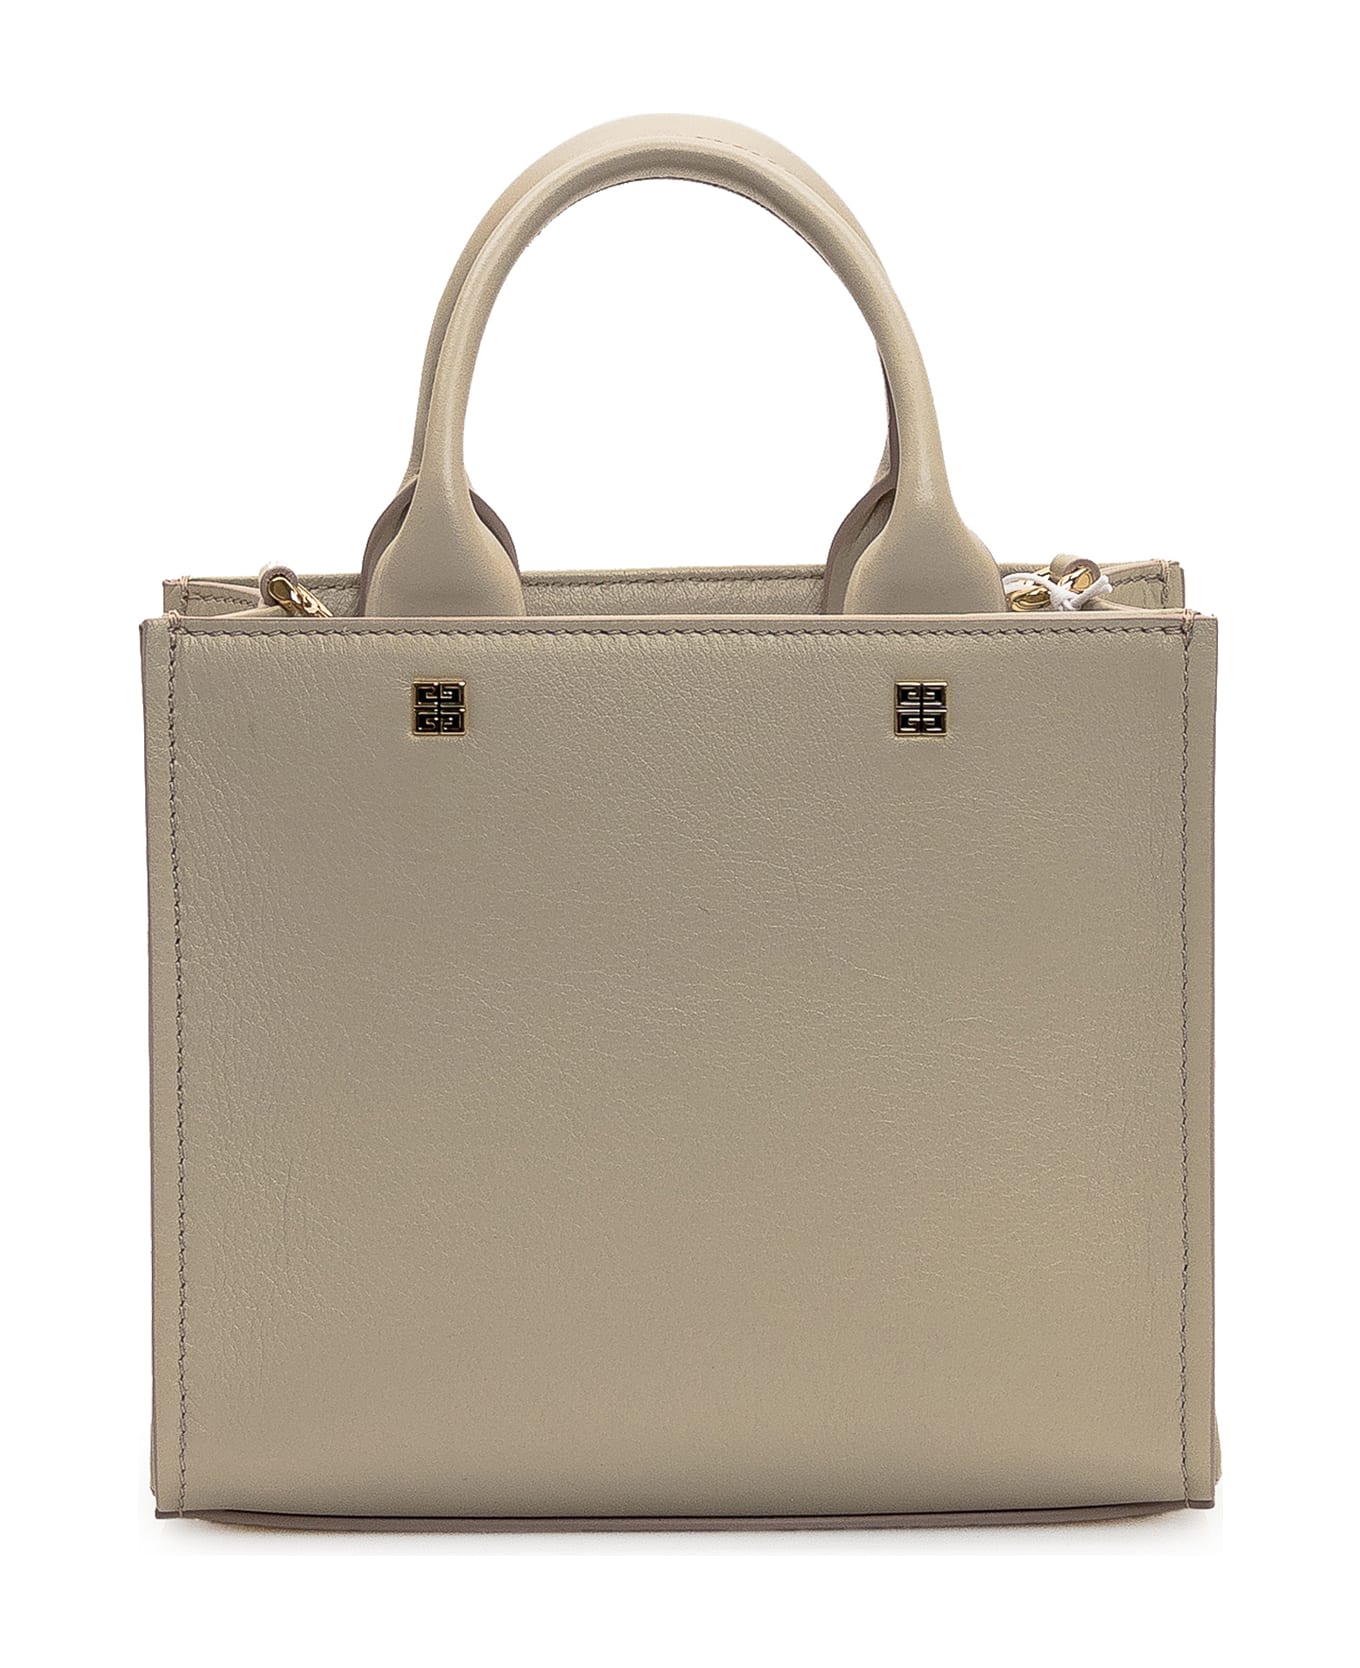 Givenchy G Tote Bag - NATURAL BEIGE トートバッグ